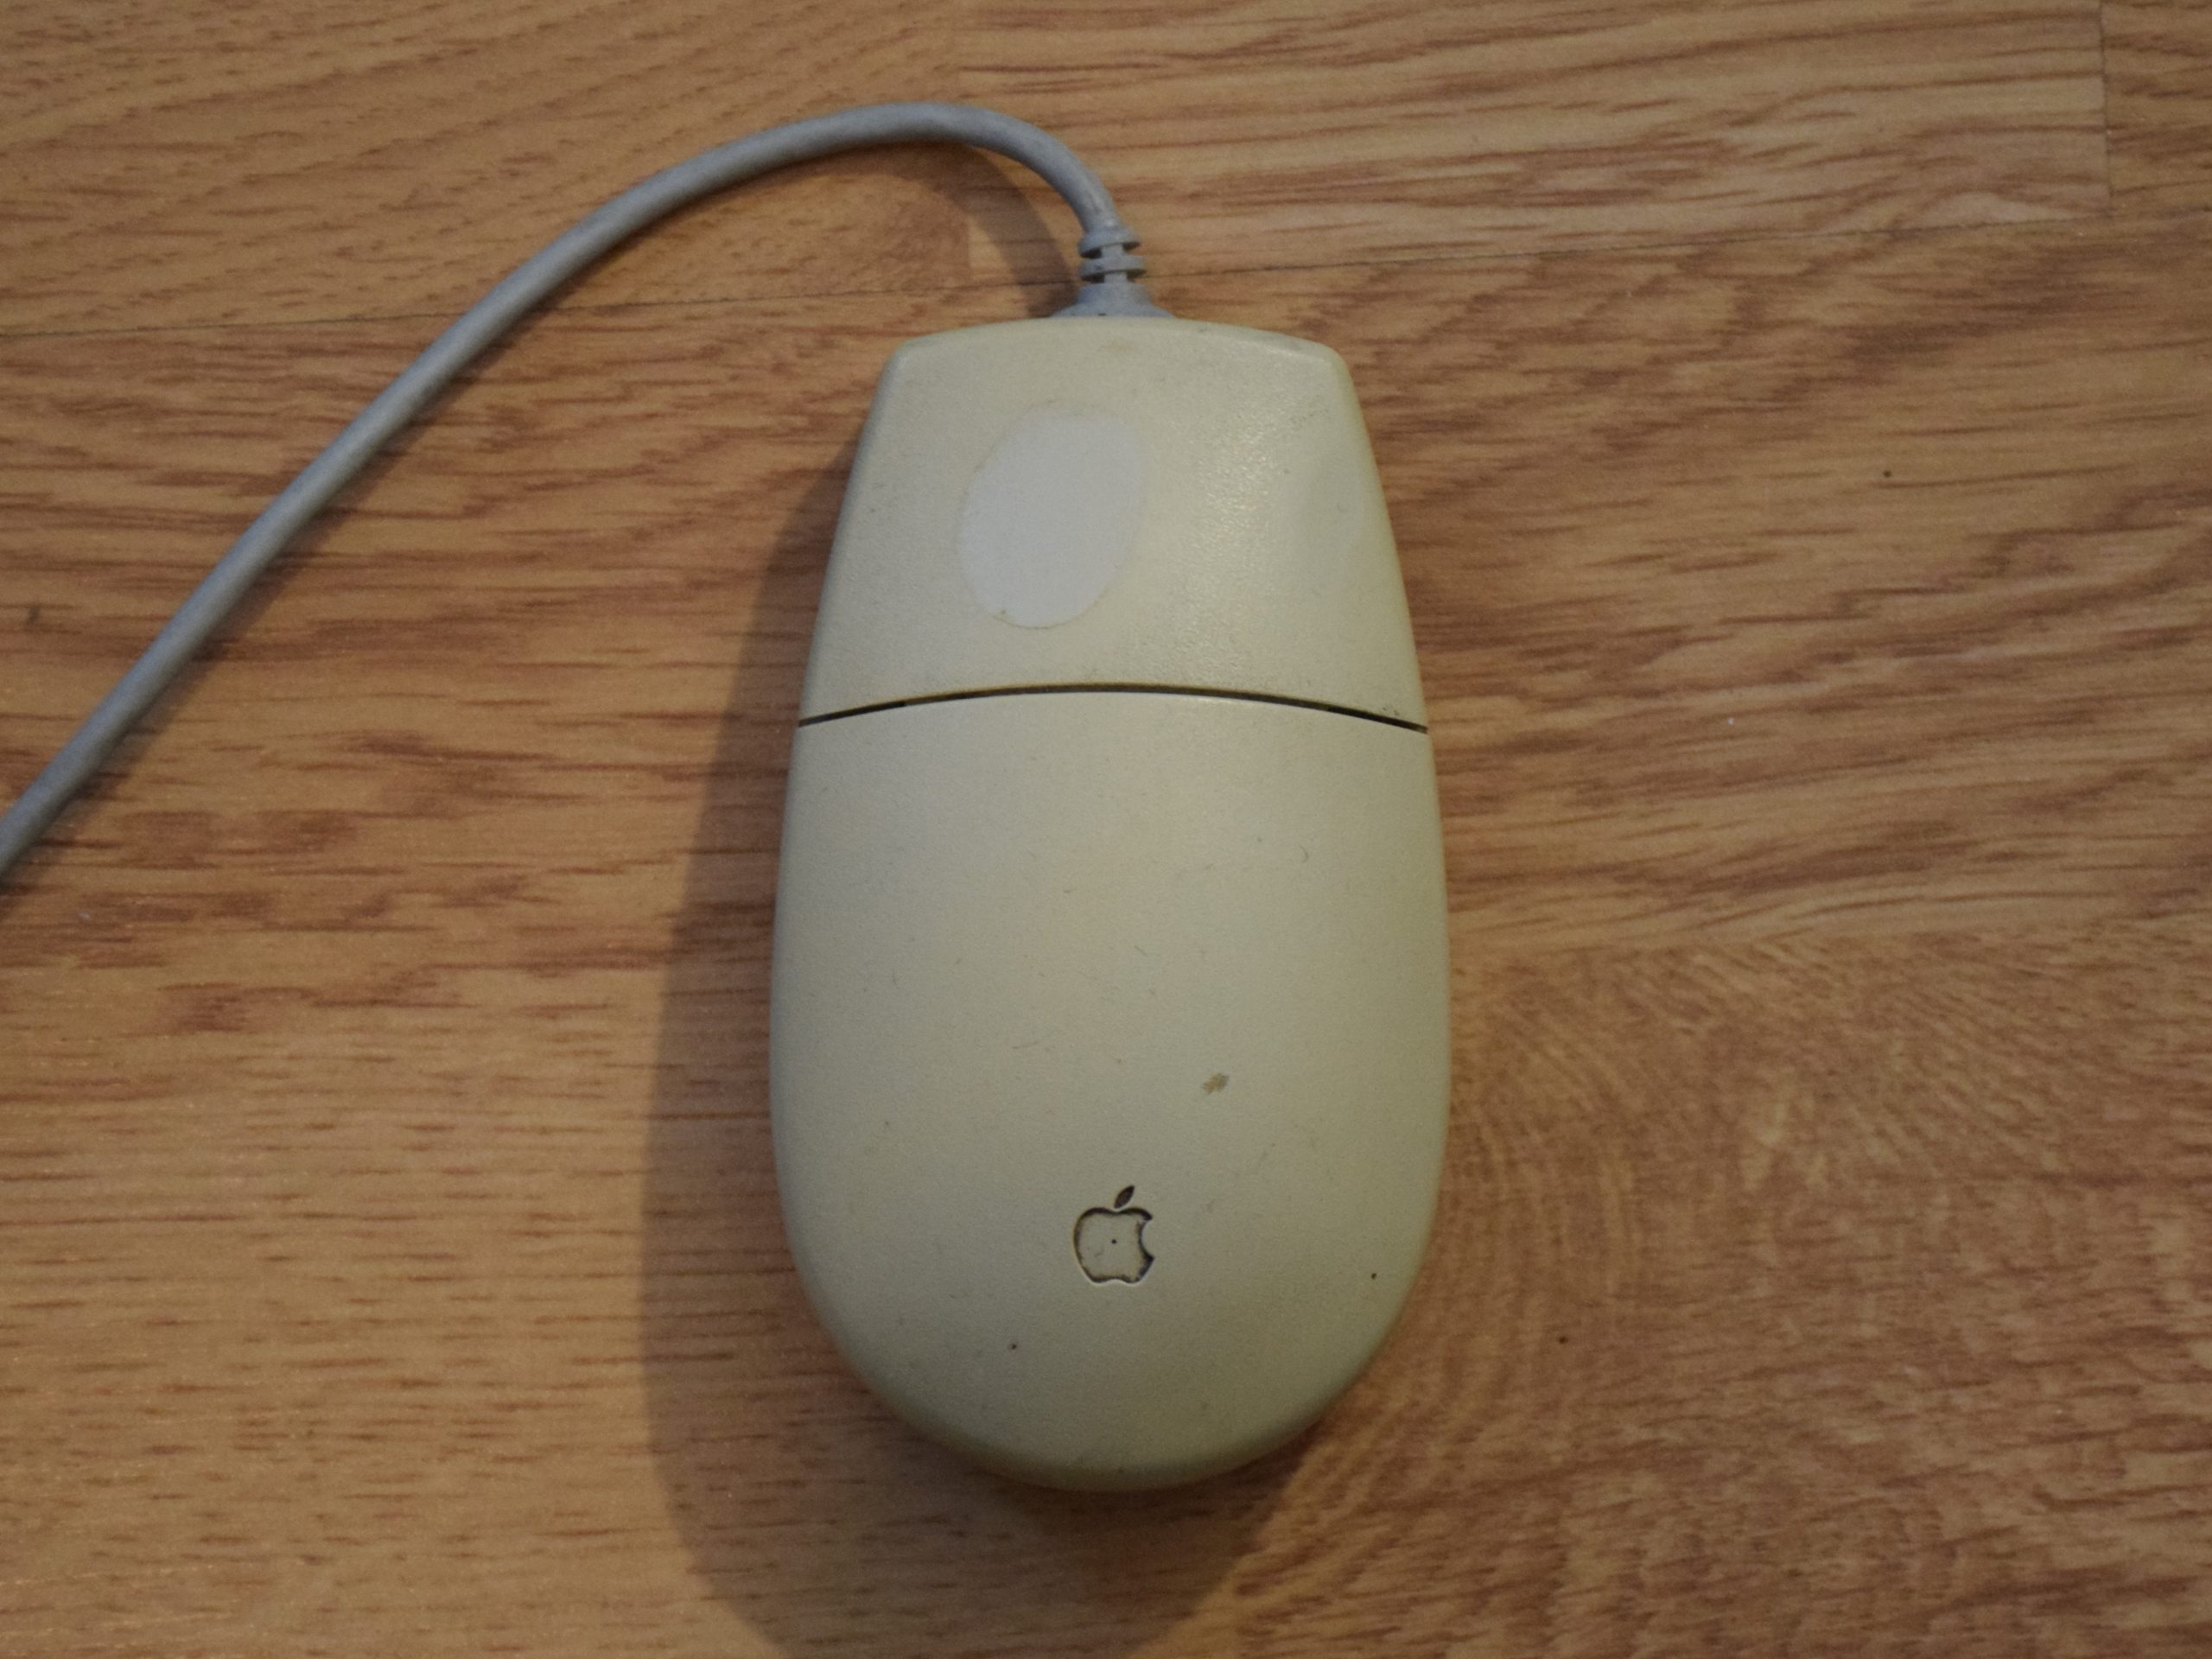 Apple Desktop Bus Mouse II